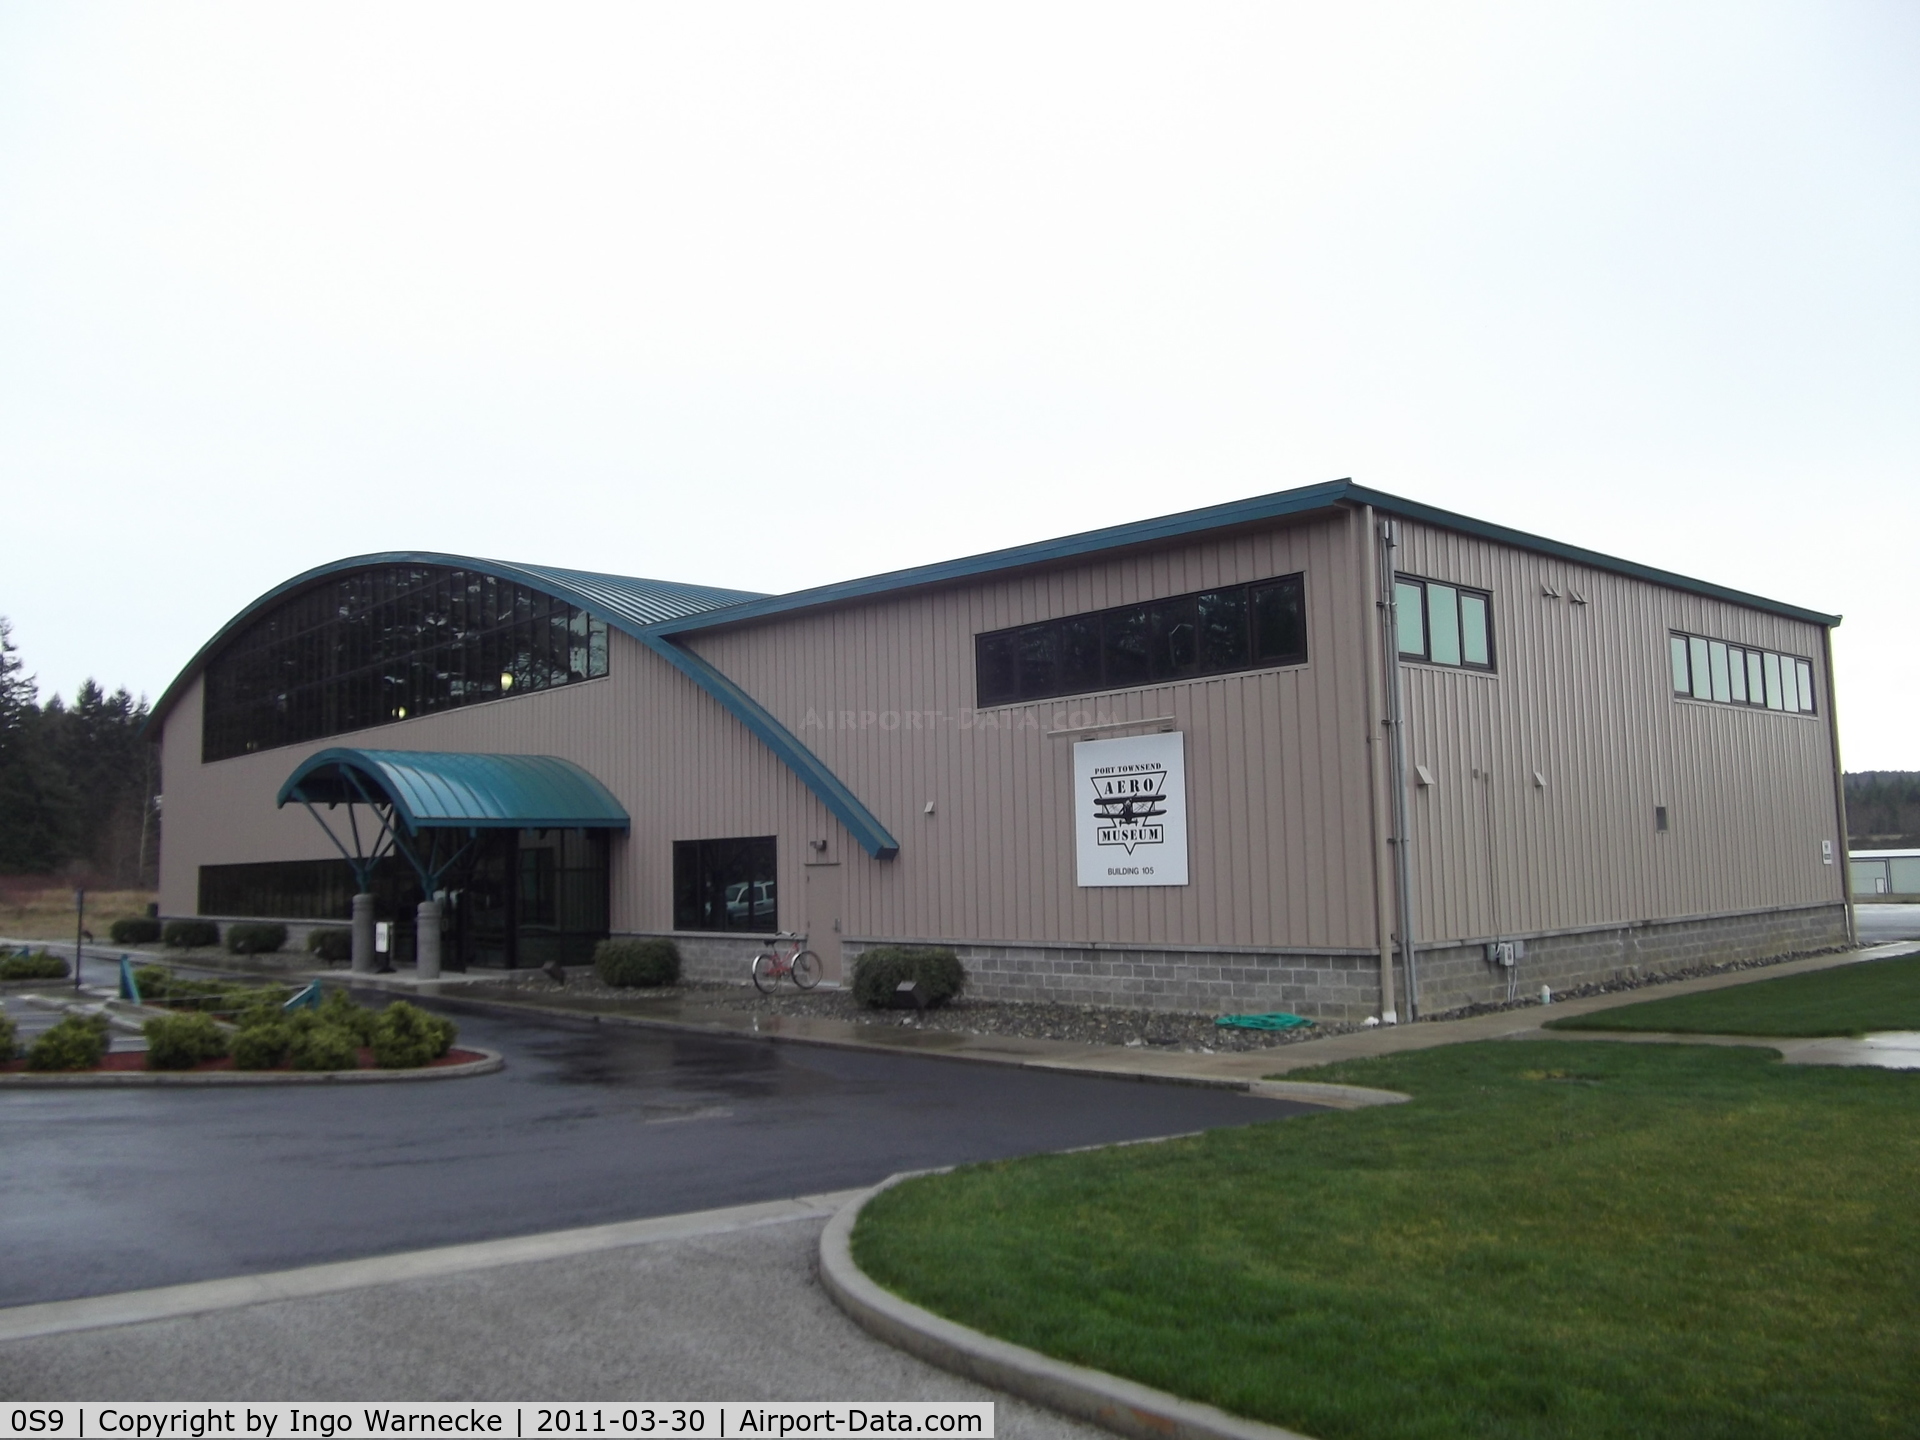 Jefferson County International Airport (0S9) - Port Townsend Aero Museum at Jefferson County Intl Airport, Port Townsend WA